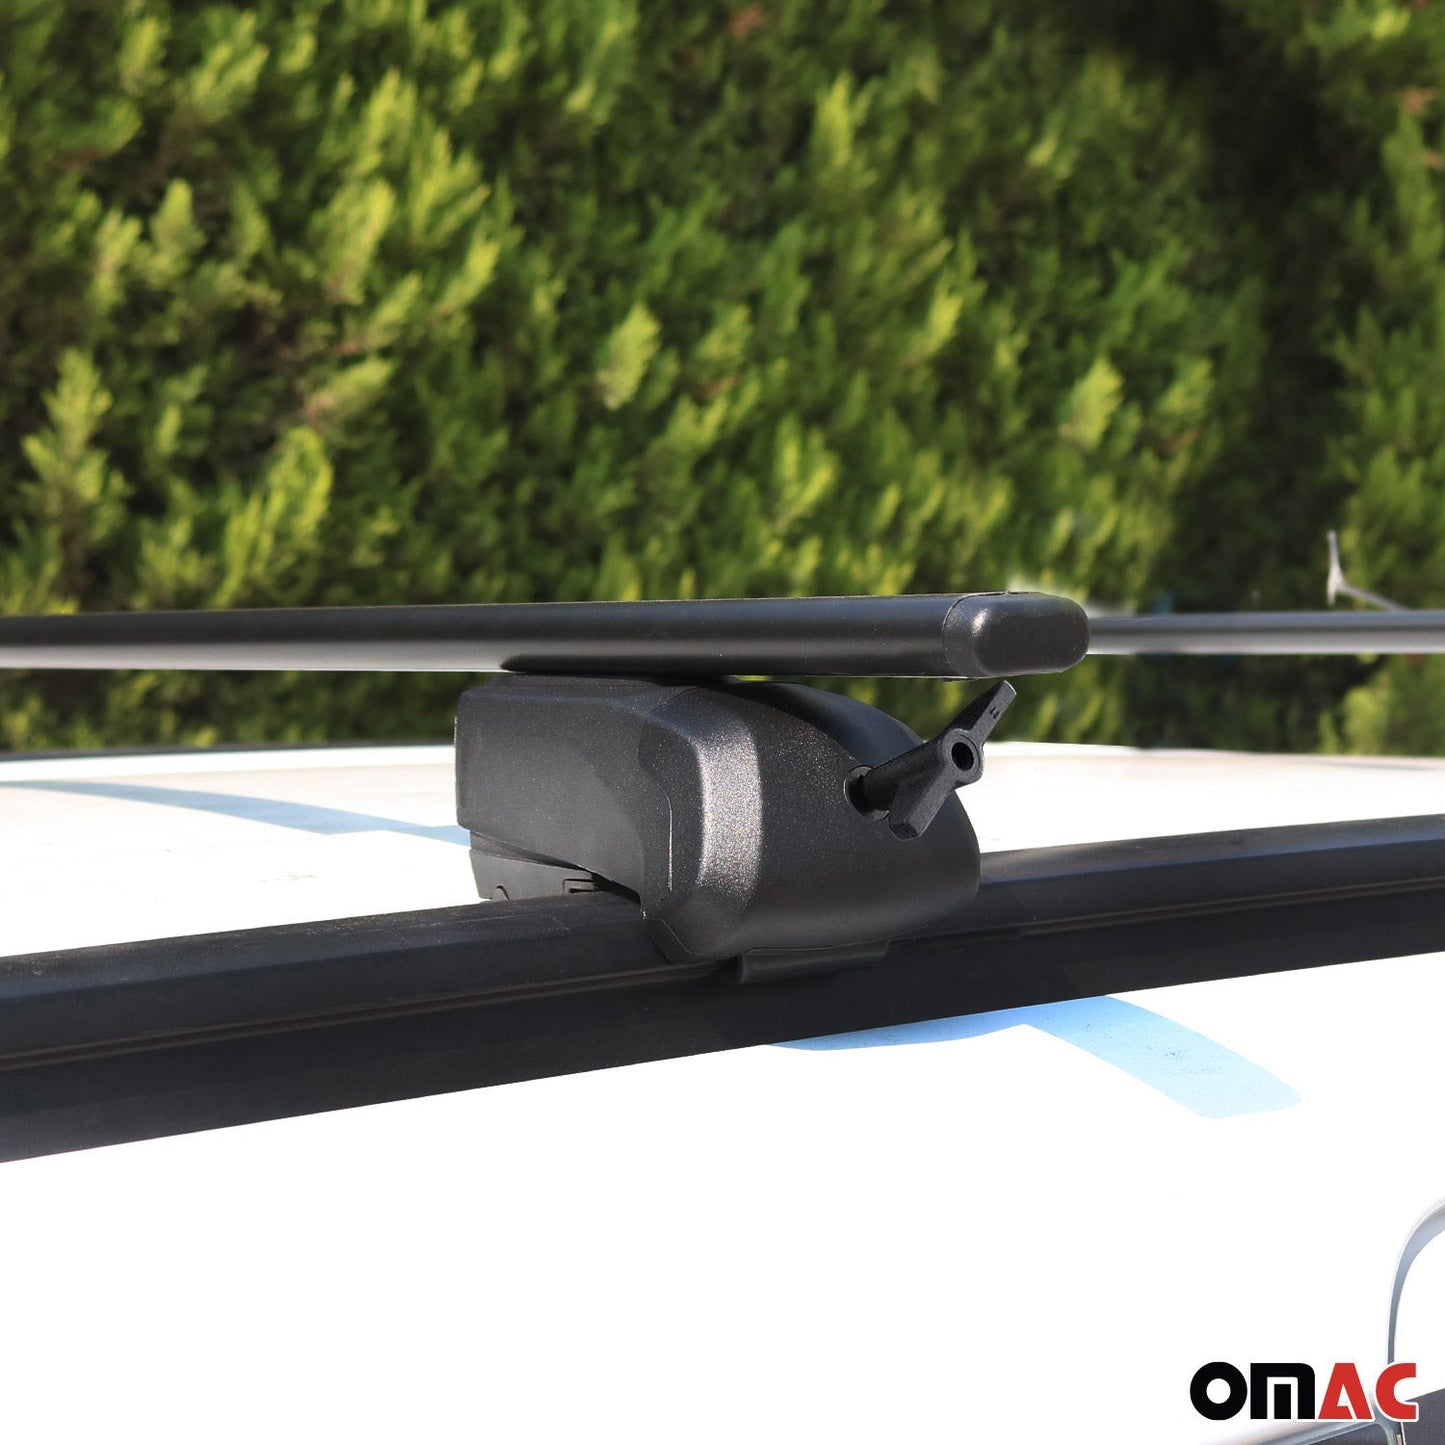 OMAC 55" Roof Racks Cross Bars Luggage Carrier Lockable Durable Iron Black 2 Pcs 9000912XLB